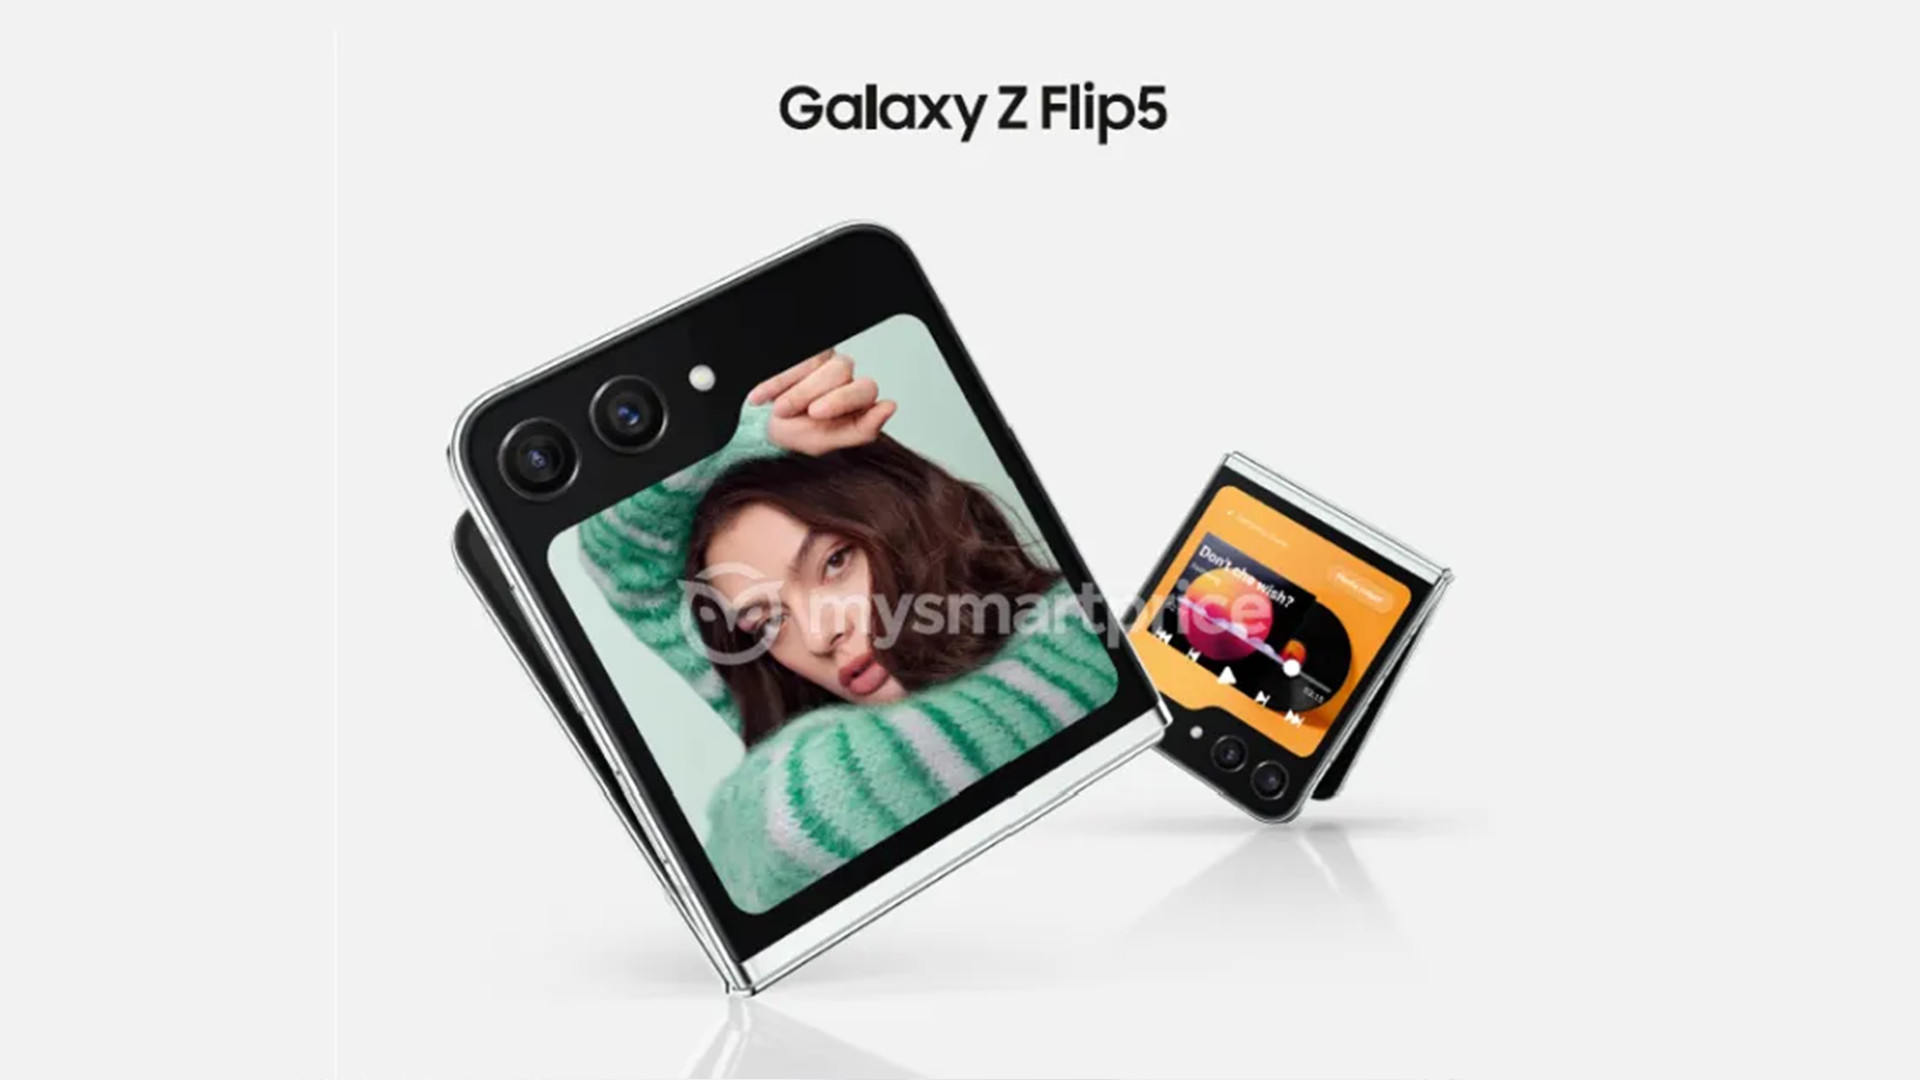 Fuite de rendu d'un Galaxy Z Flip5